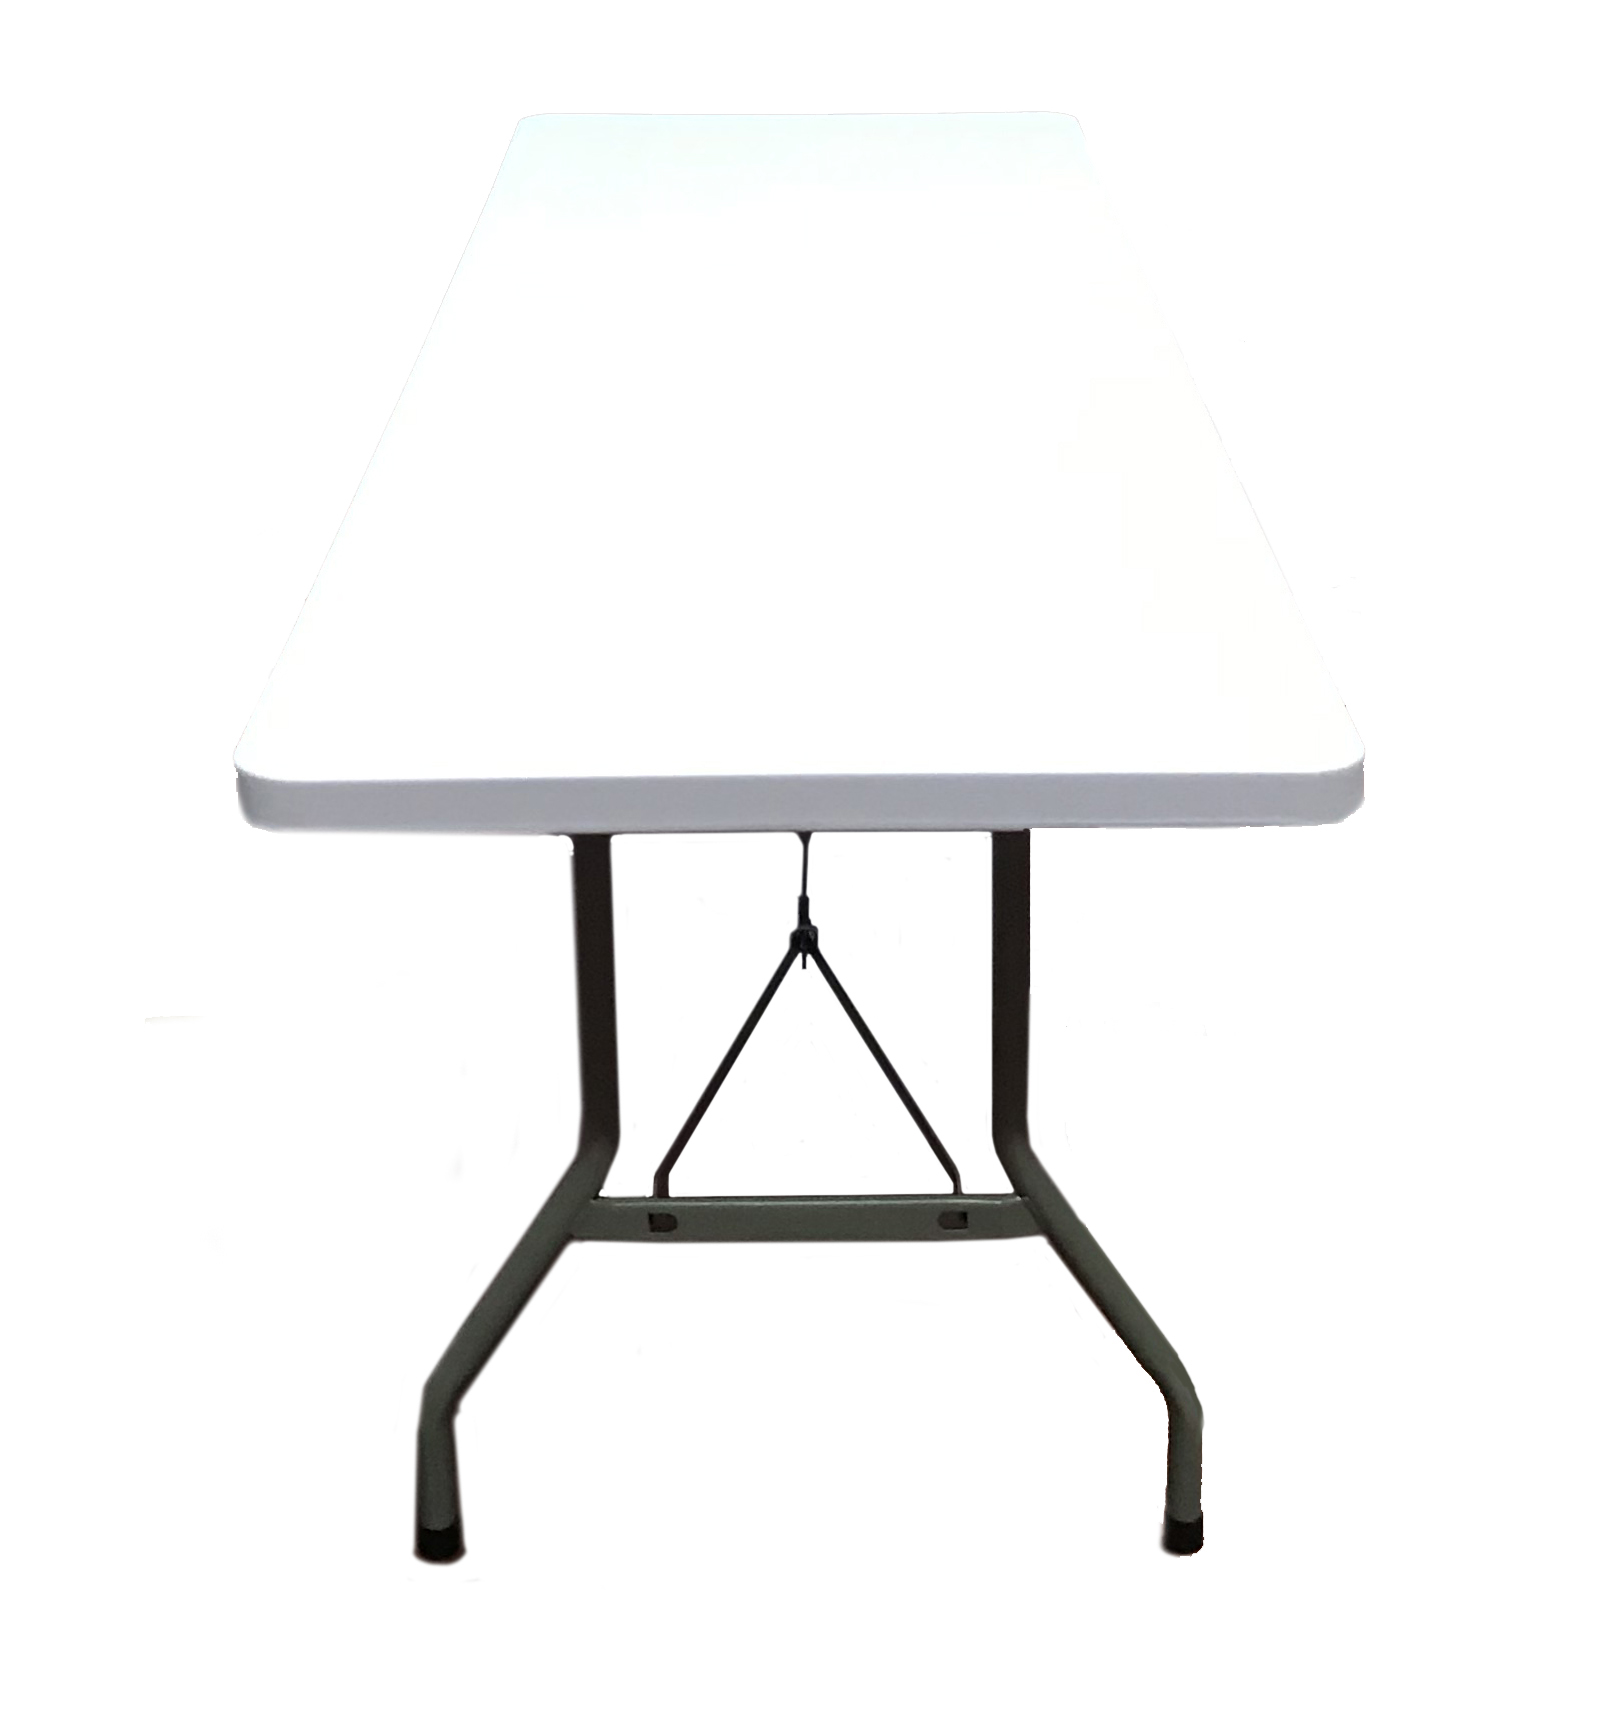 6ft Rectangular folding table 183cm / 8 people